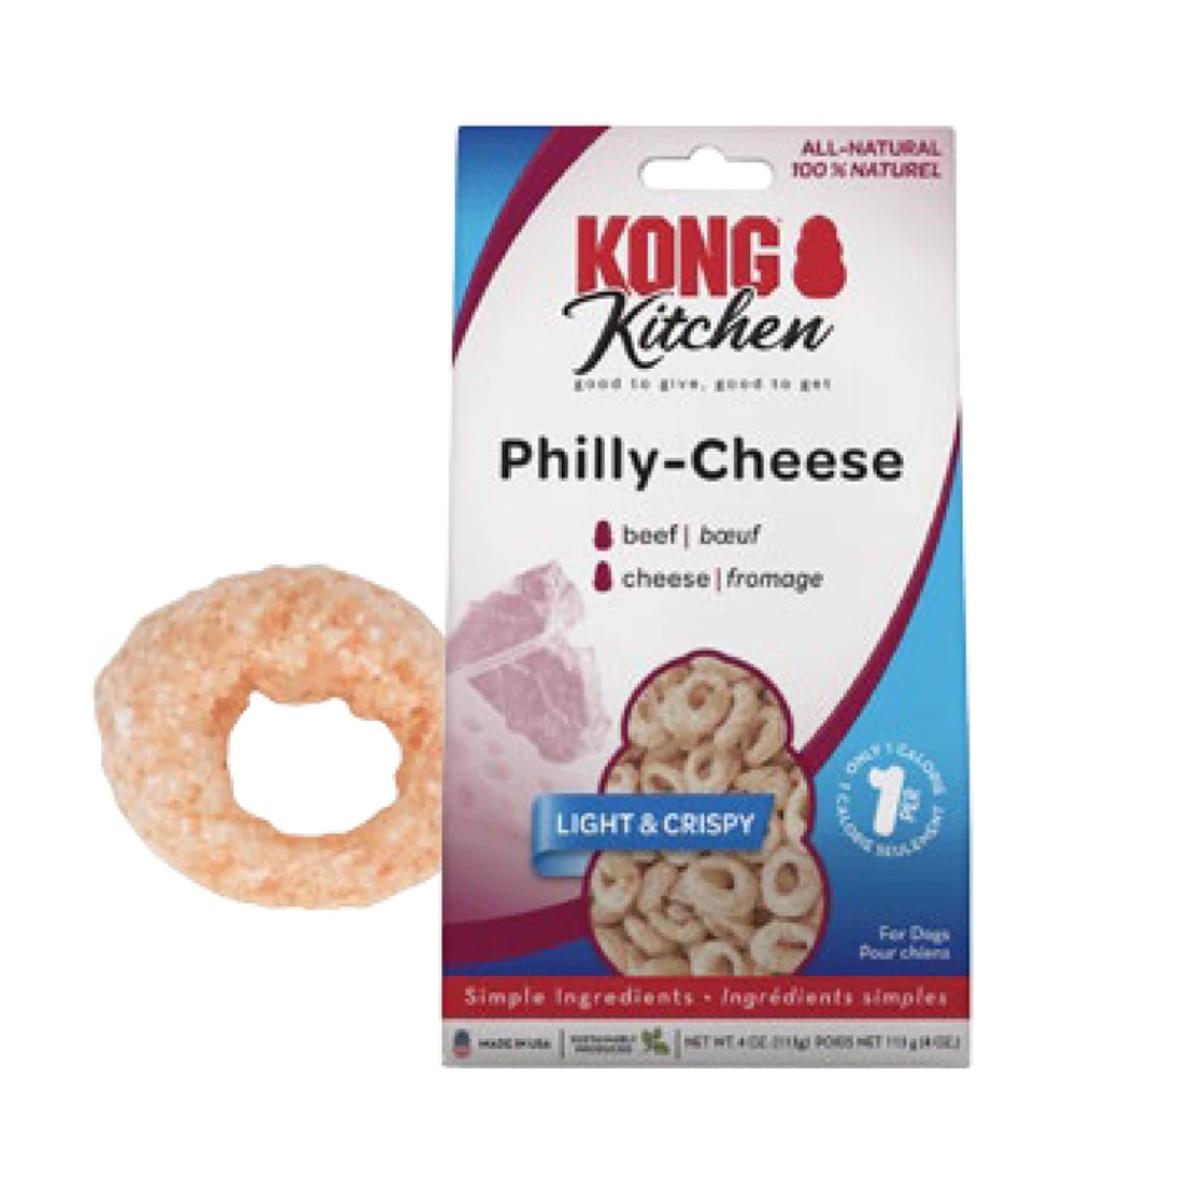 KONG Kitchen Light & Crispy Dog Treat - Philly Cheese